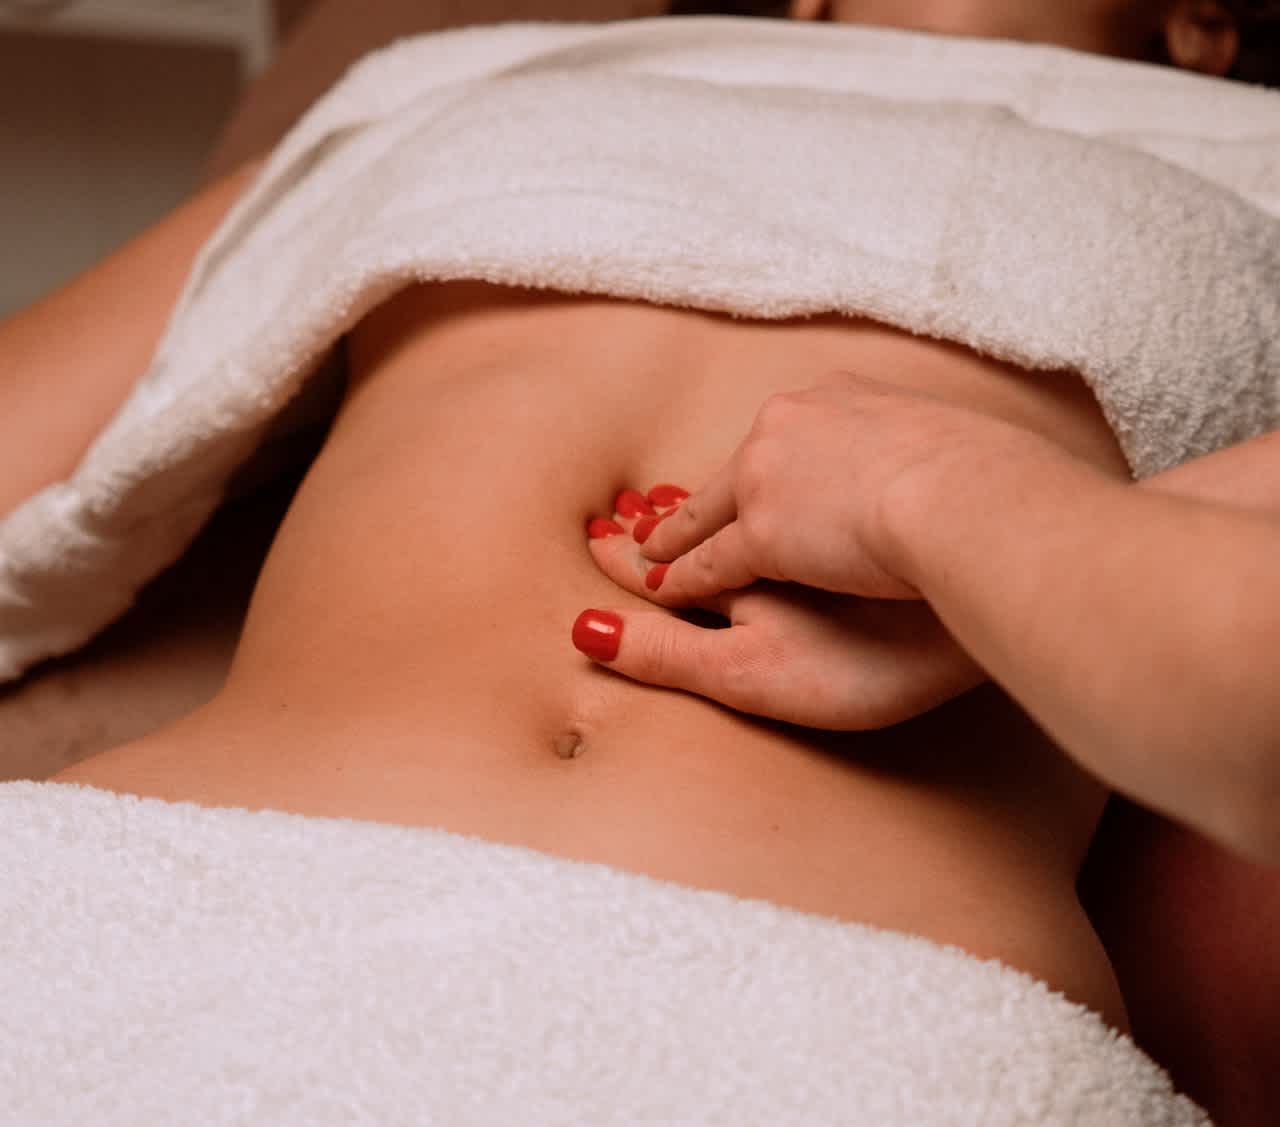 Woman massaging a patient's abdomen